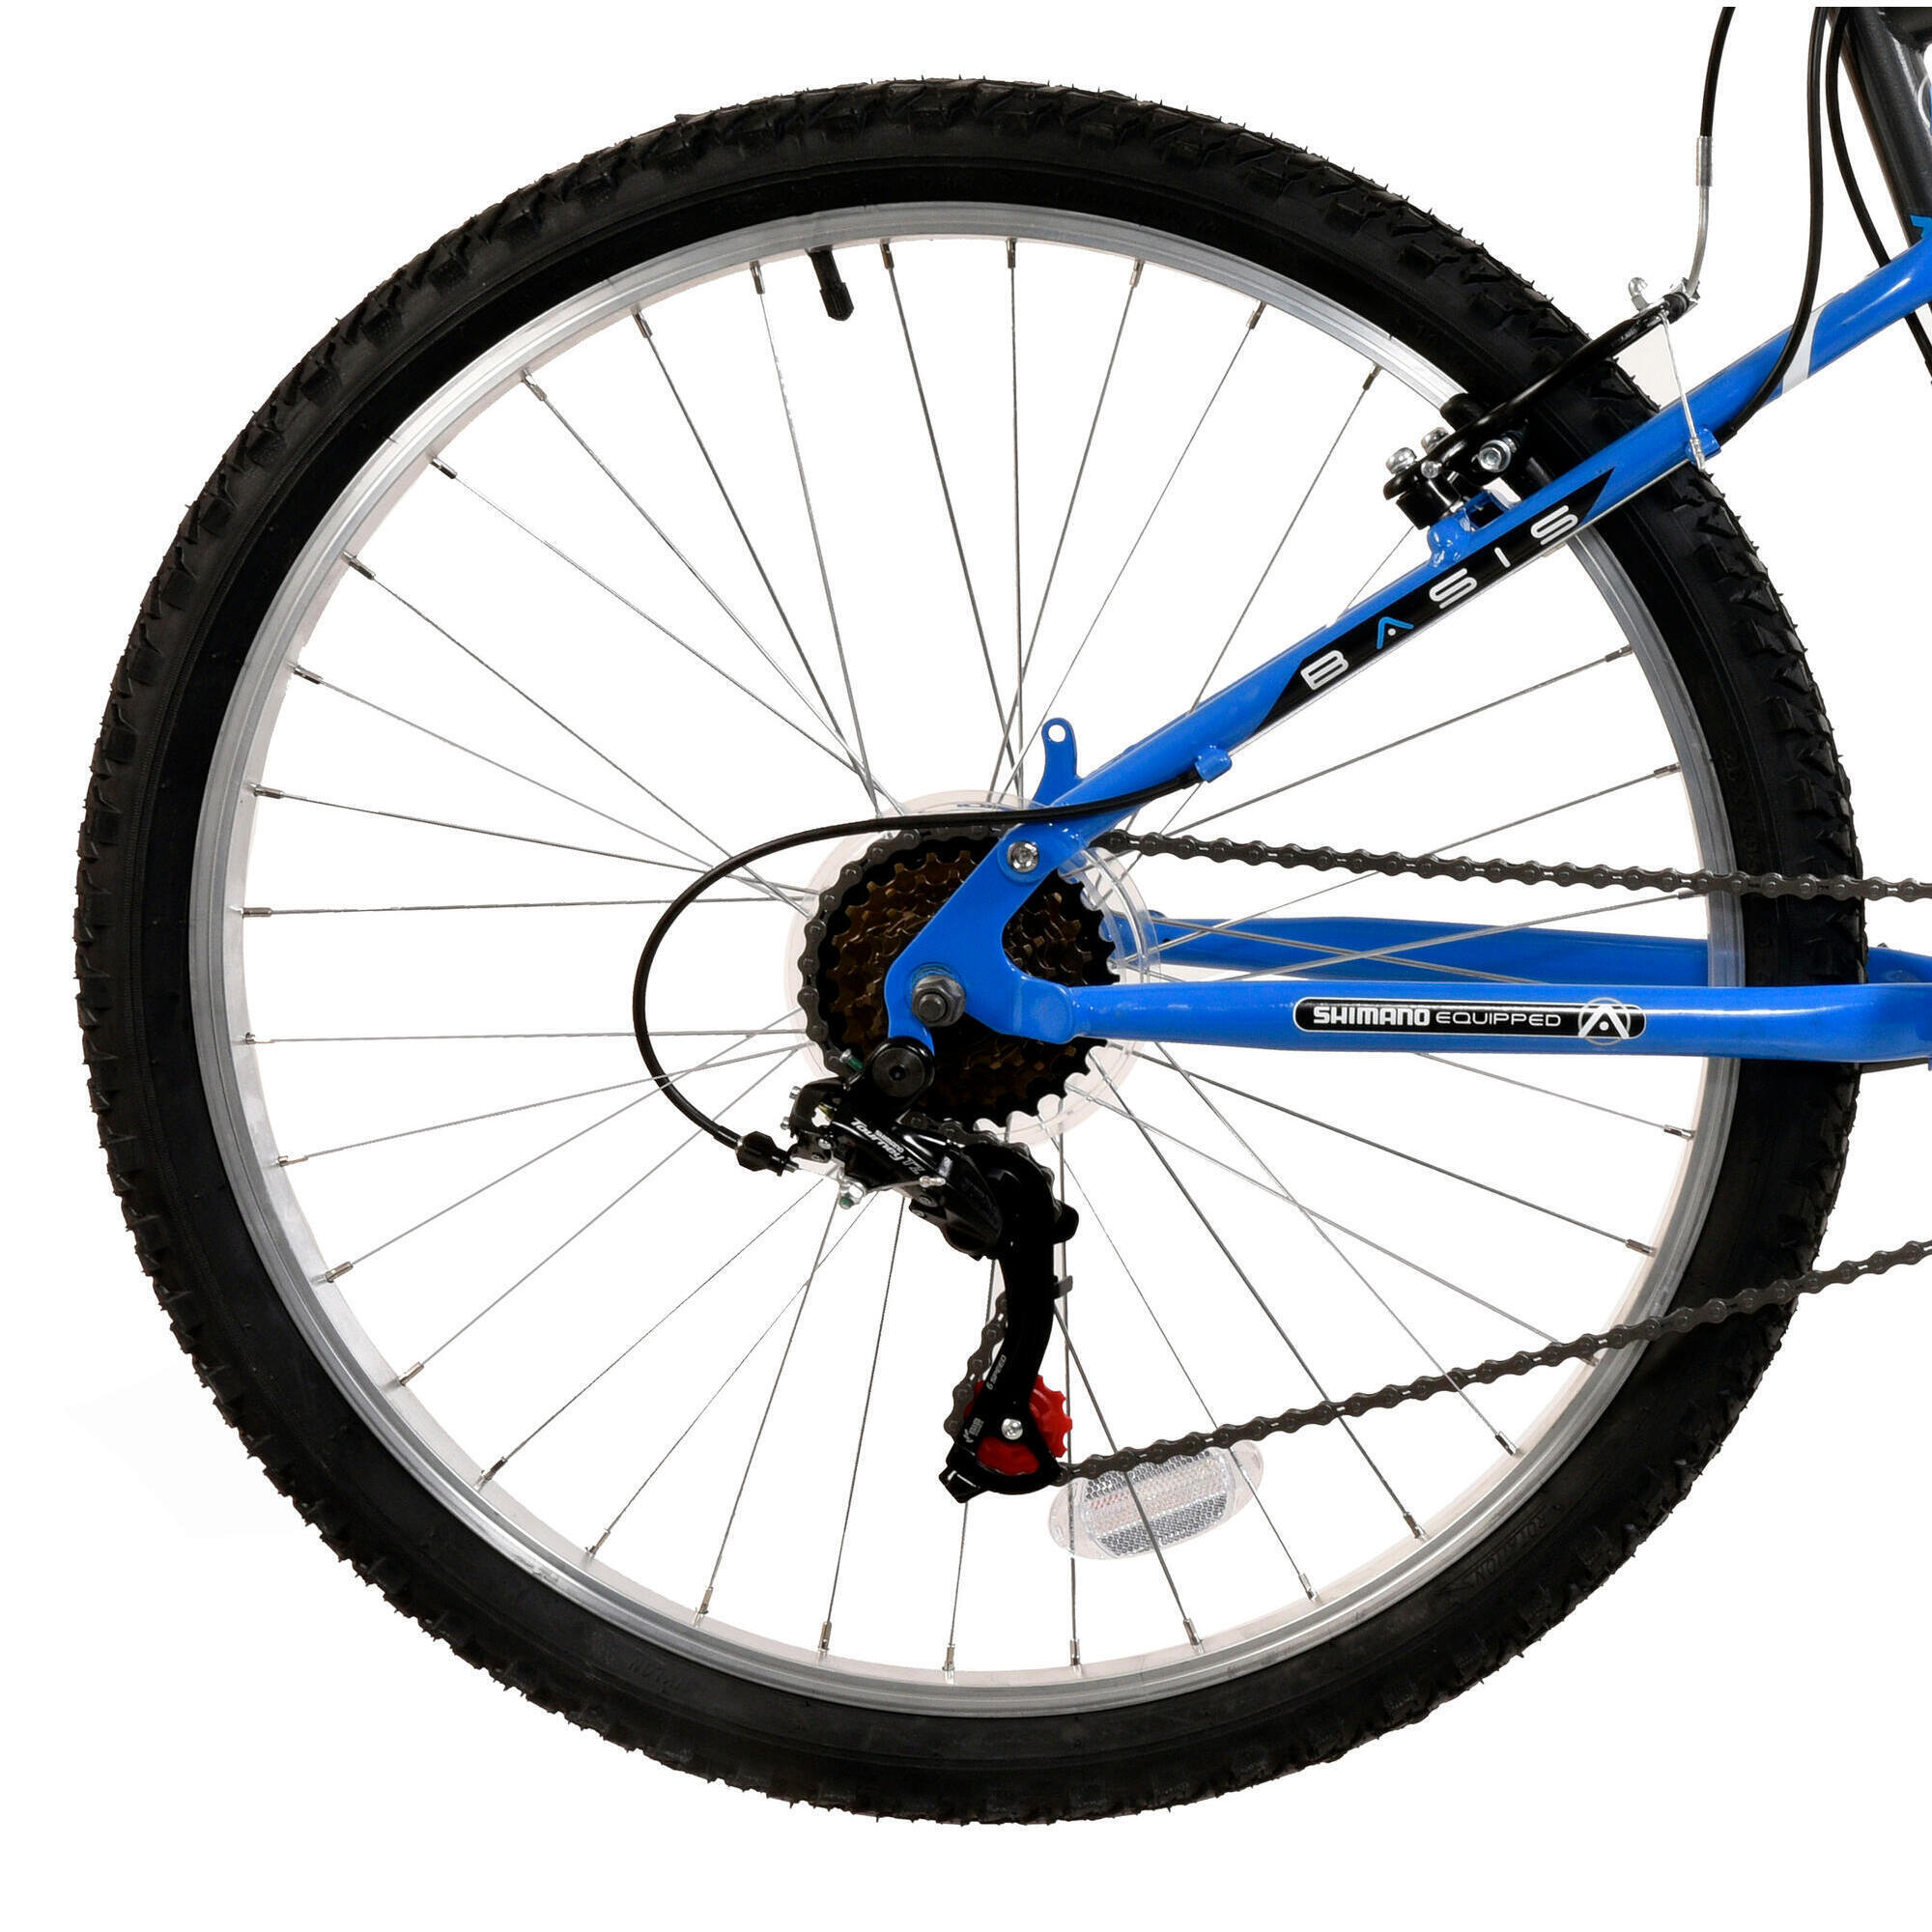 Basis Link Adult's Full Suspension Mountain Bike, 26In Wheel - Graphite/Blue 5/5